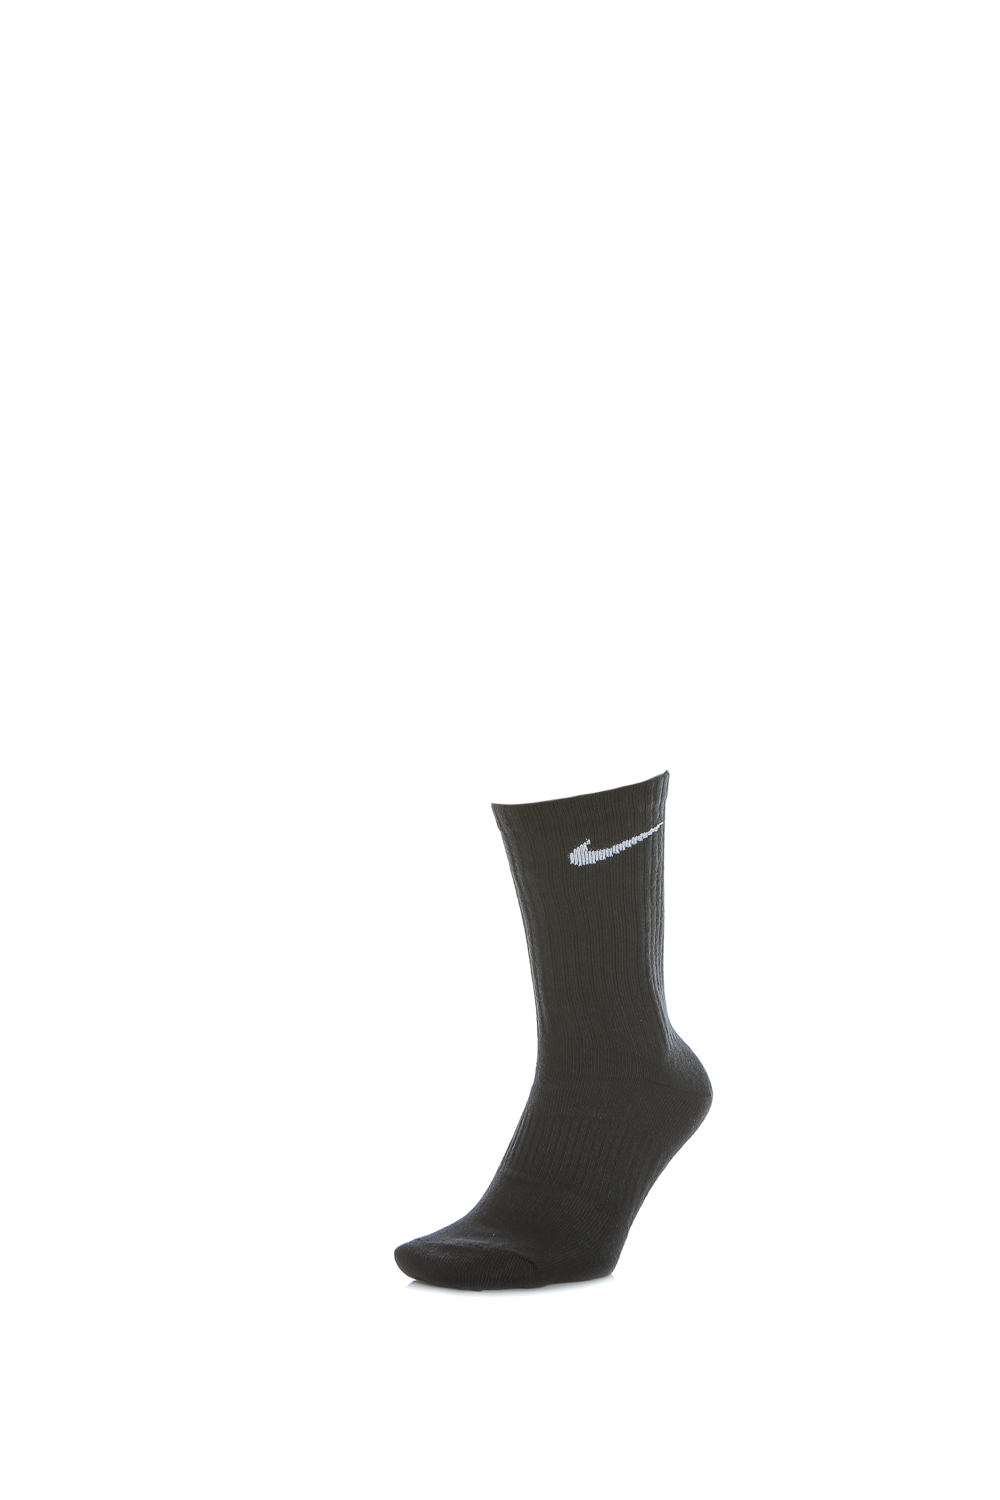 NIKE - Σετ κάλτσες NIKE μαύρες Γυναικεία/Αξεσουάρ/Κάλτσες